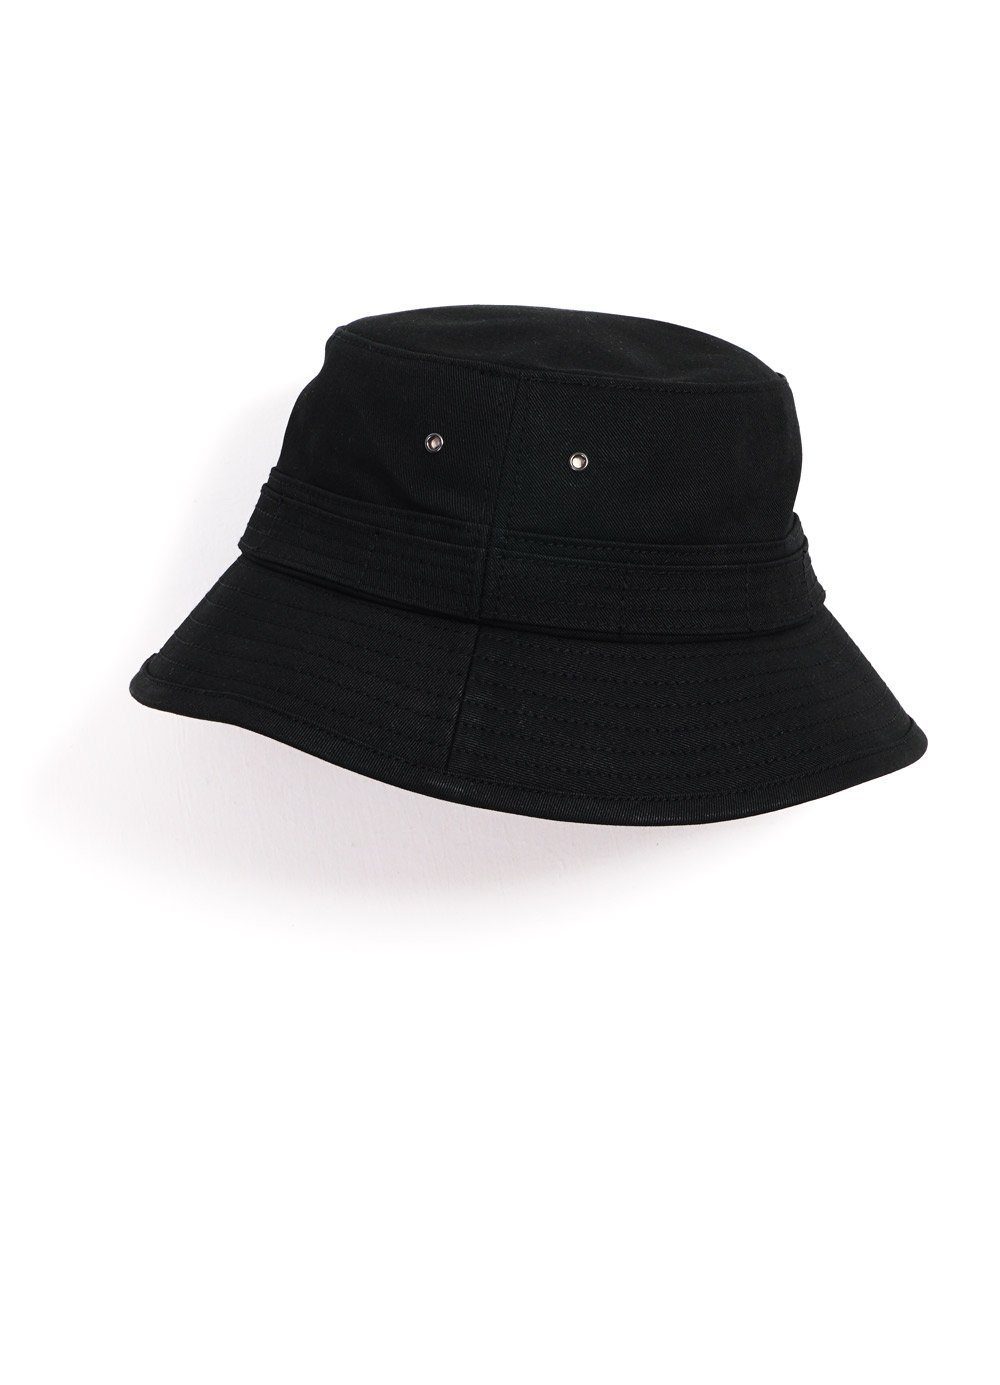 HANSEN GARMENTS - EDVARD | Bucket Hat | Black - HANSEN Garments